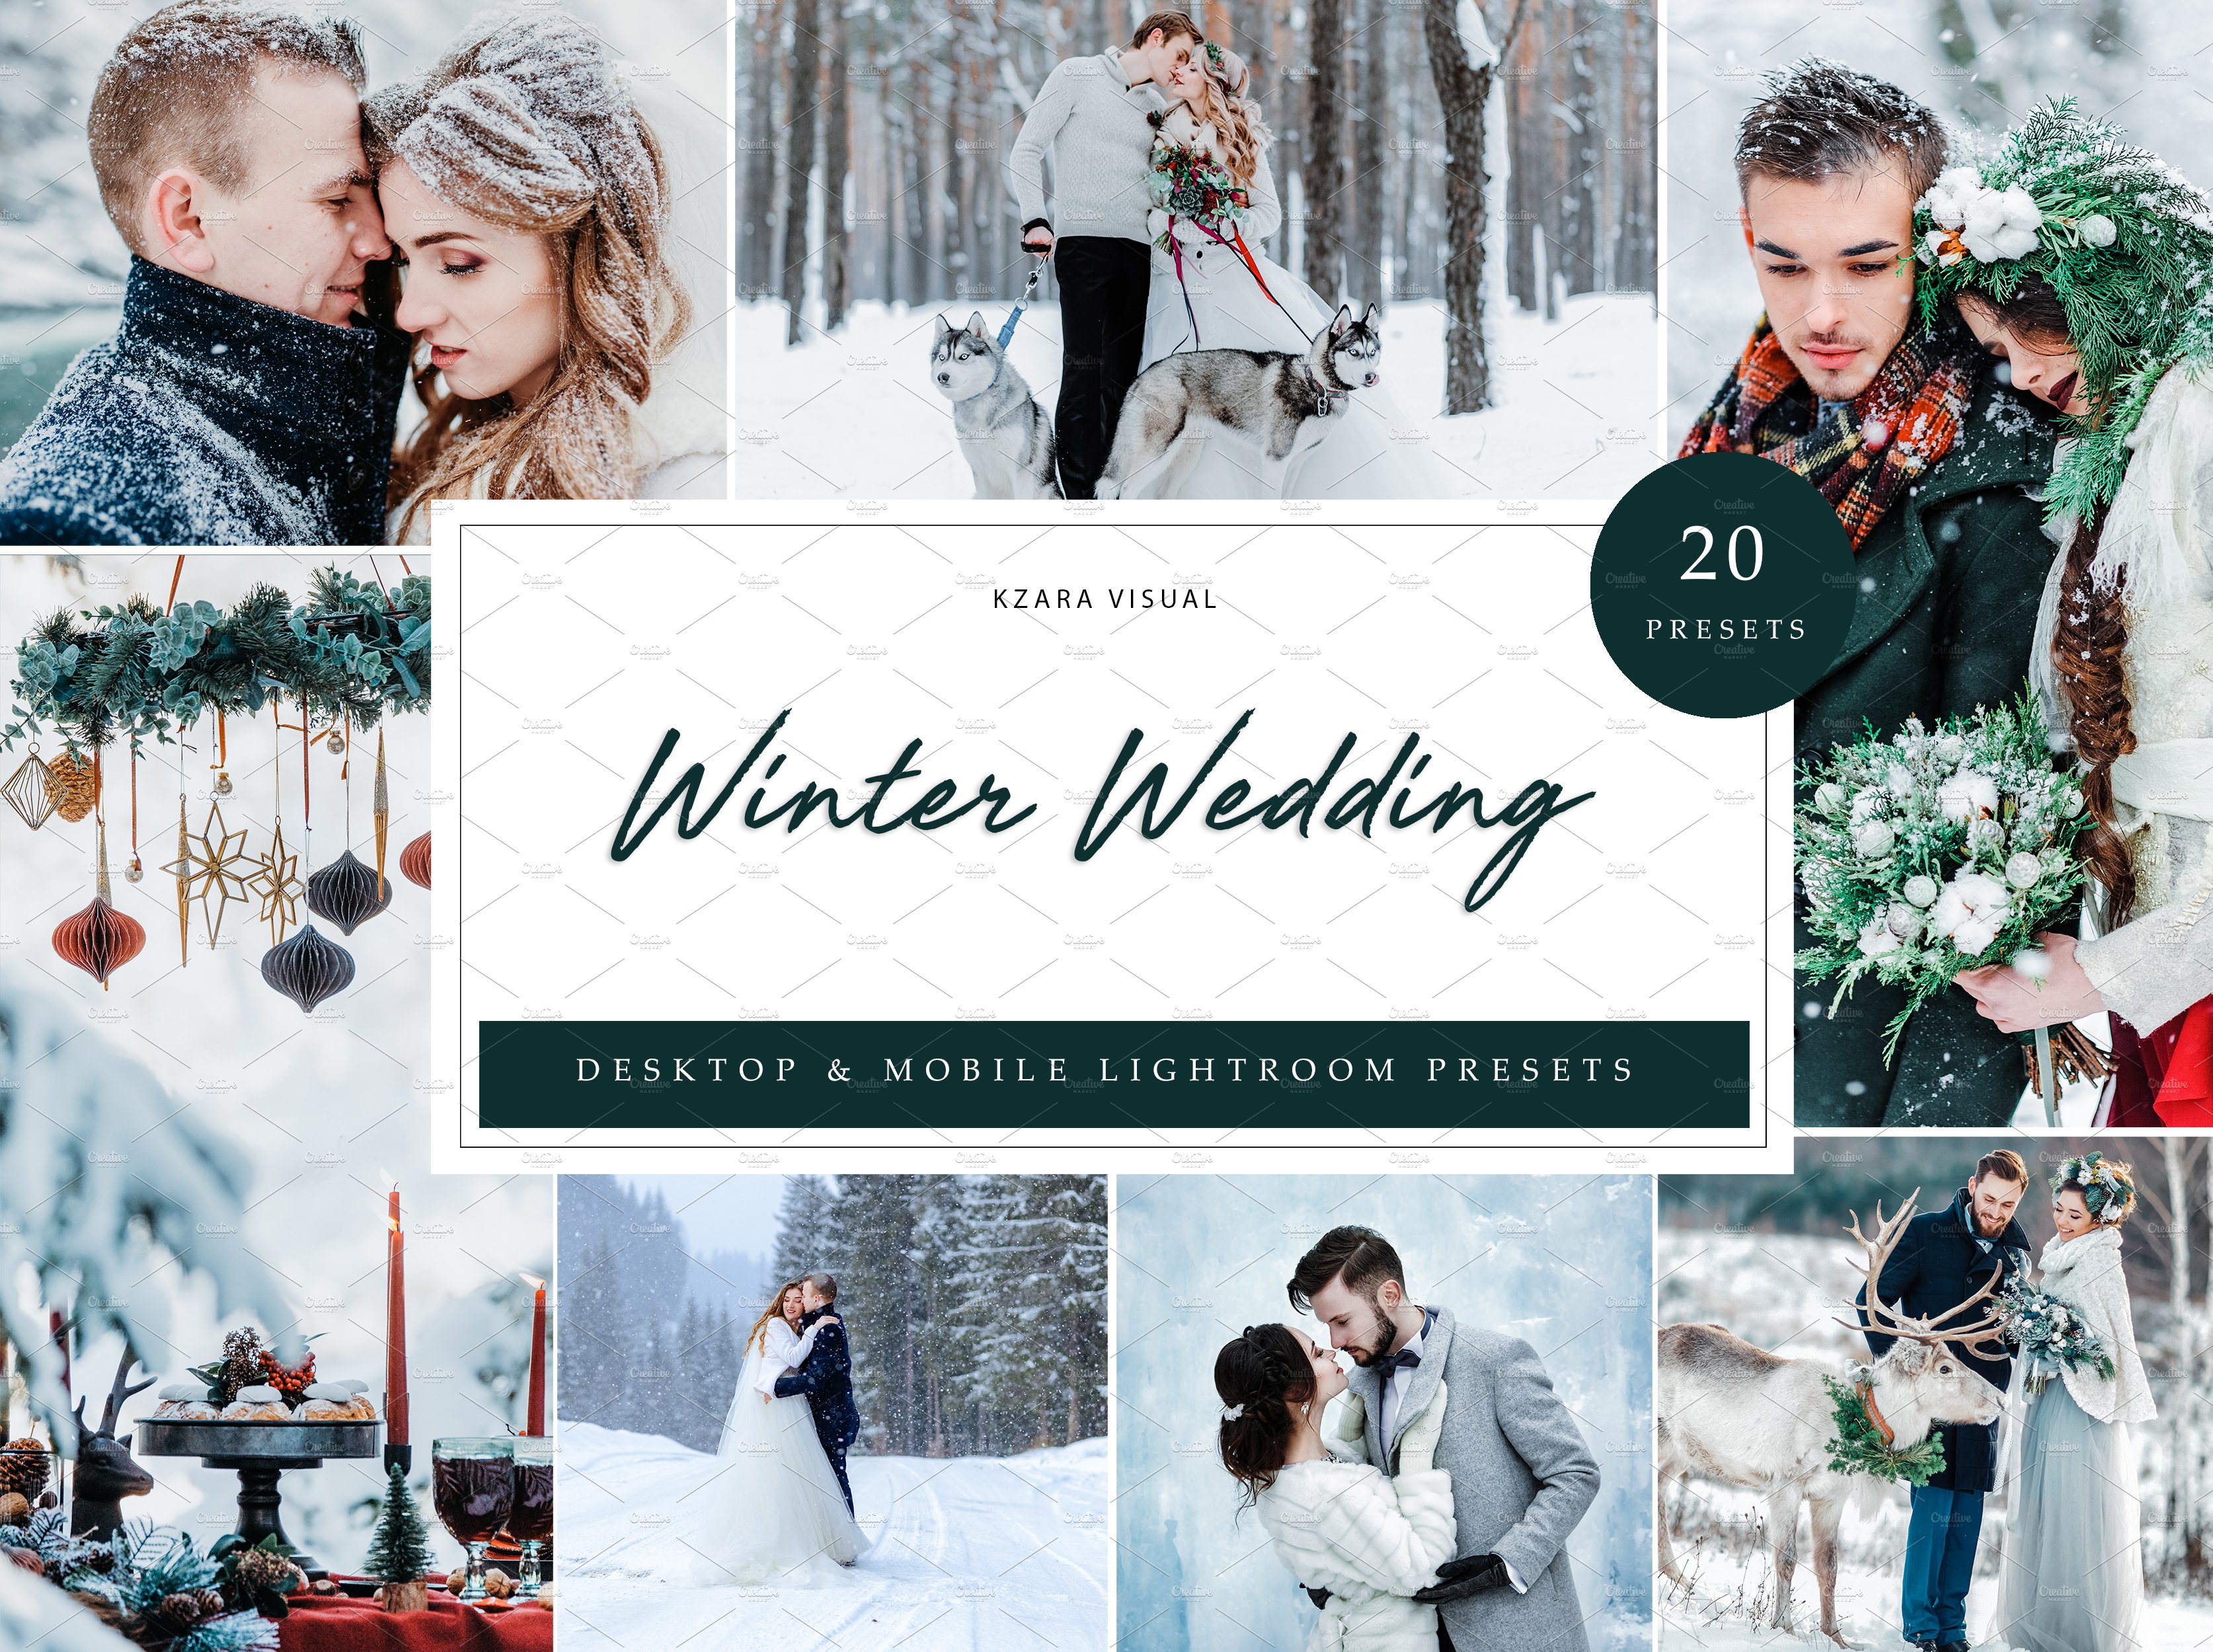 20x Winter Wedding Lightroom Presetscover image.